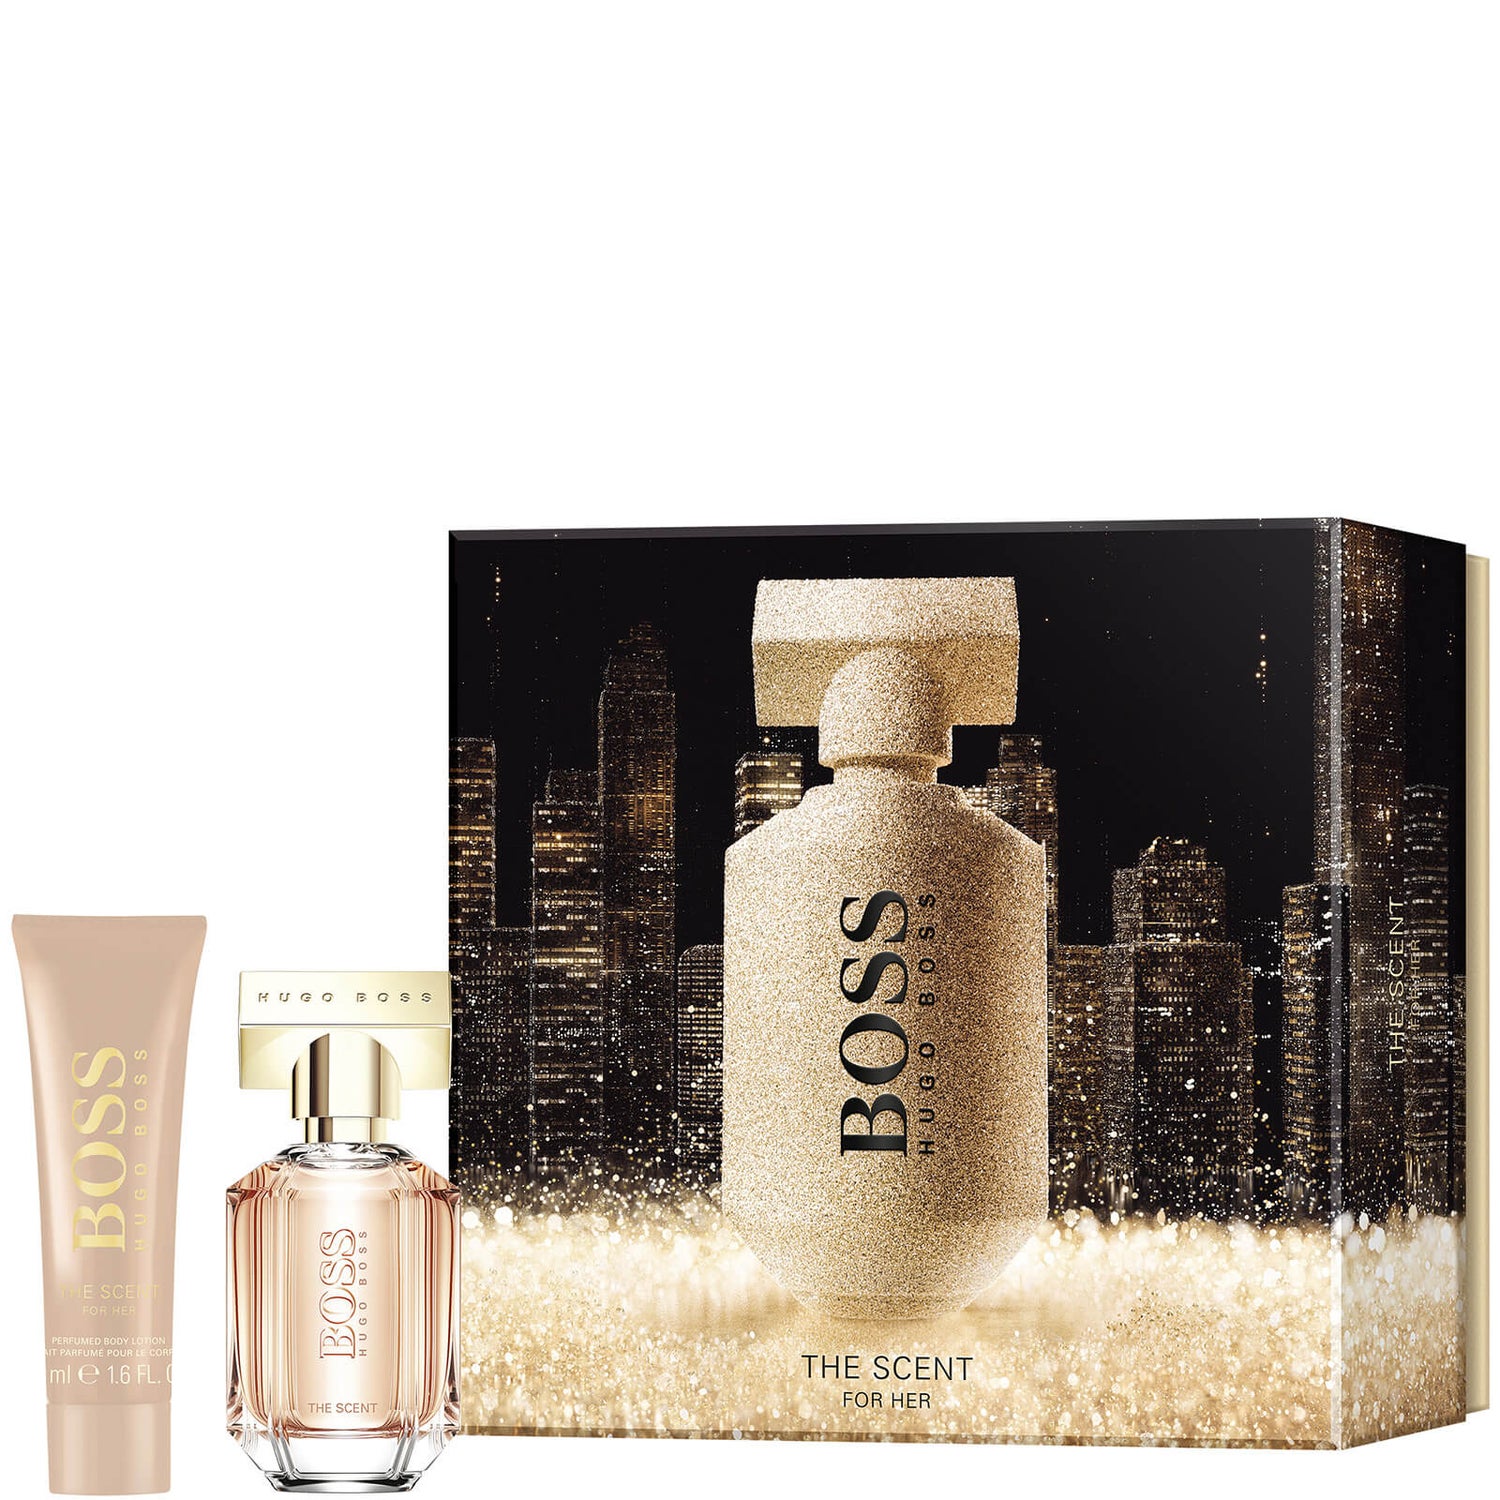 HUGO BOSS The Scent For Her Eau de Parfum 30ml Gift Set(휴고보스 더 센트 포 허 오 드 퍼퓸 30ml 기프트 세트)